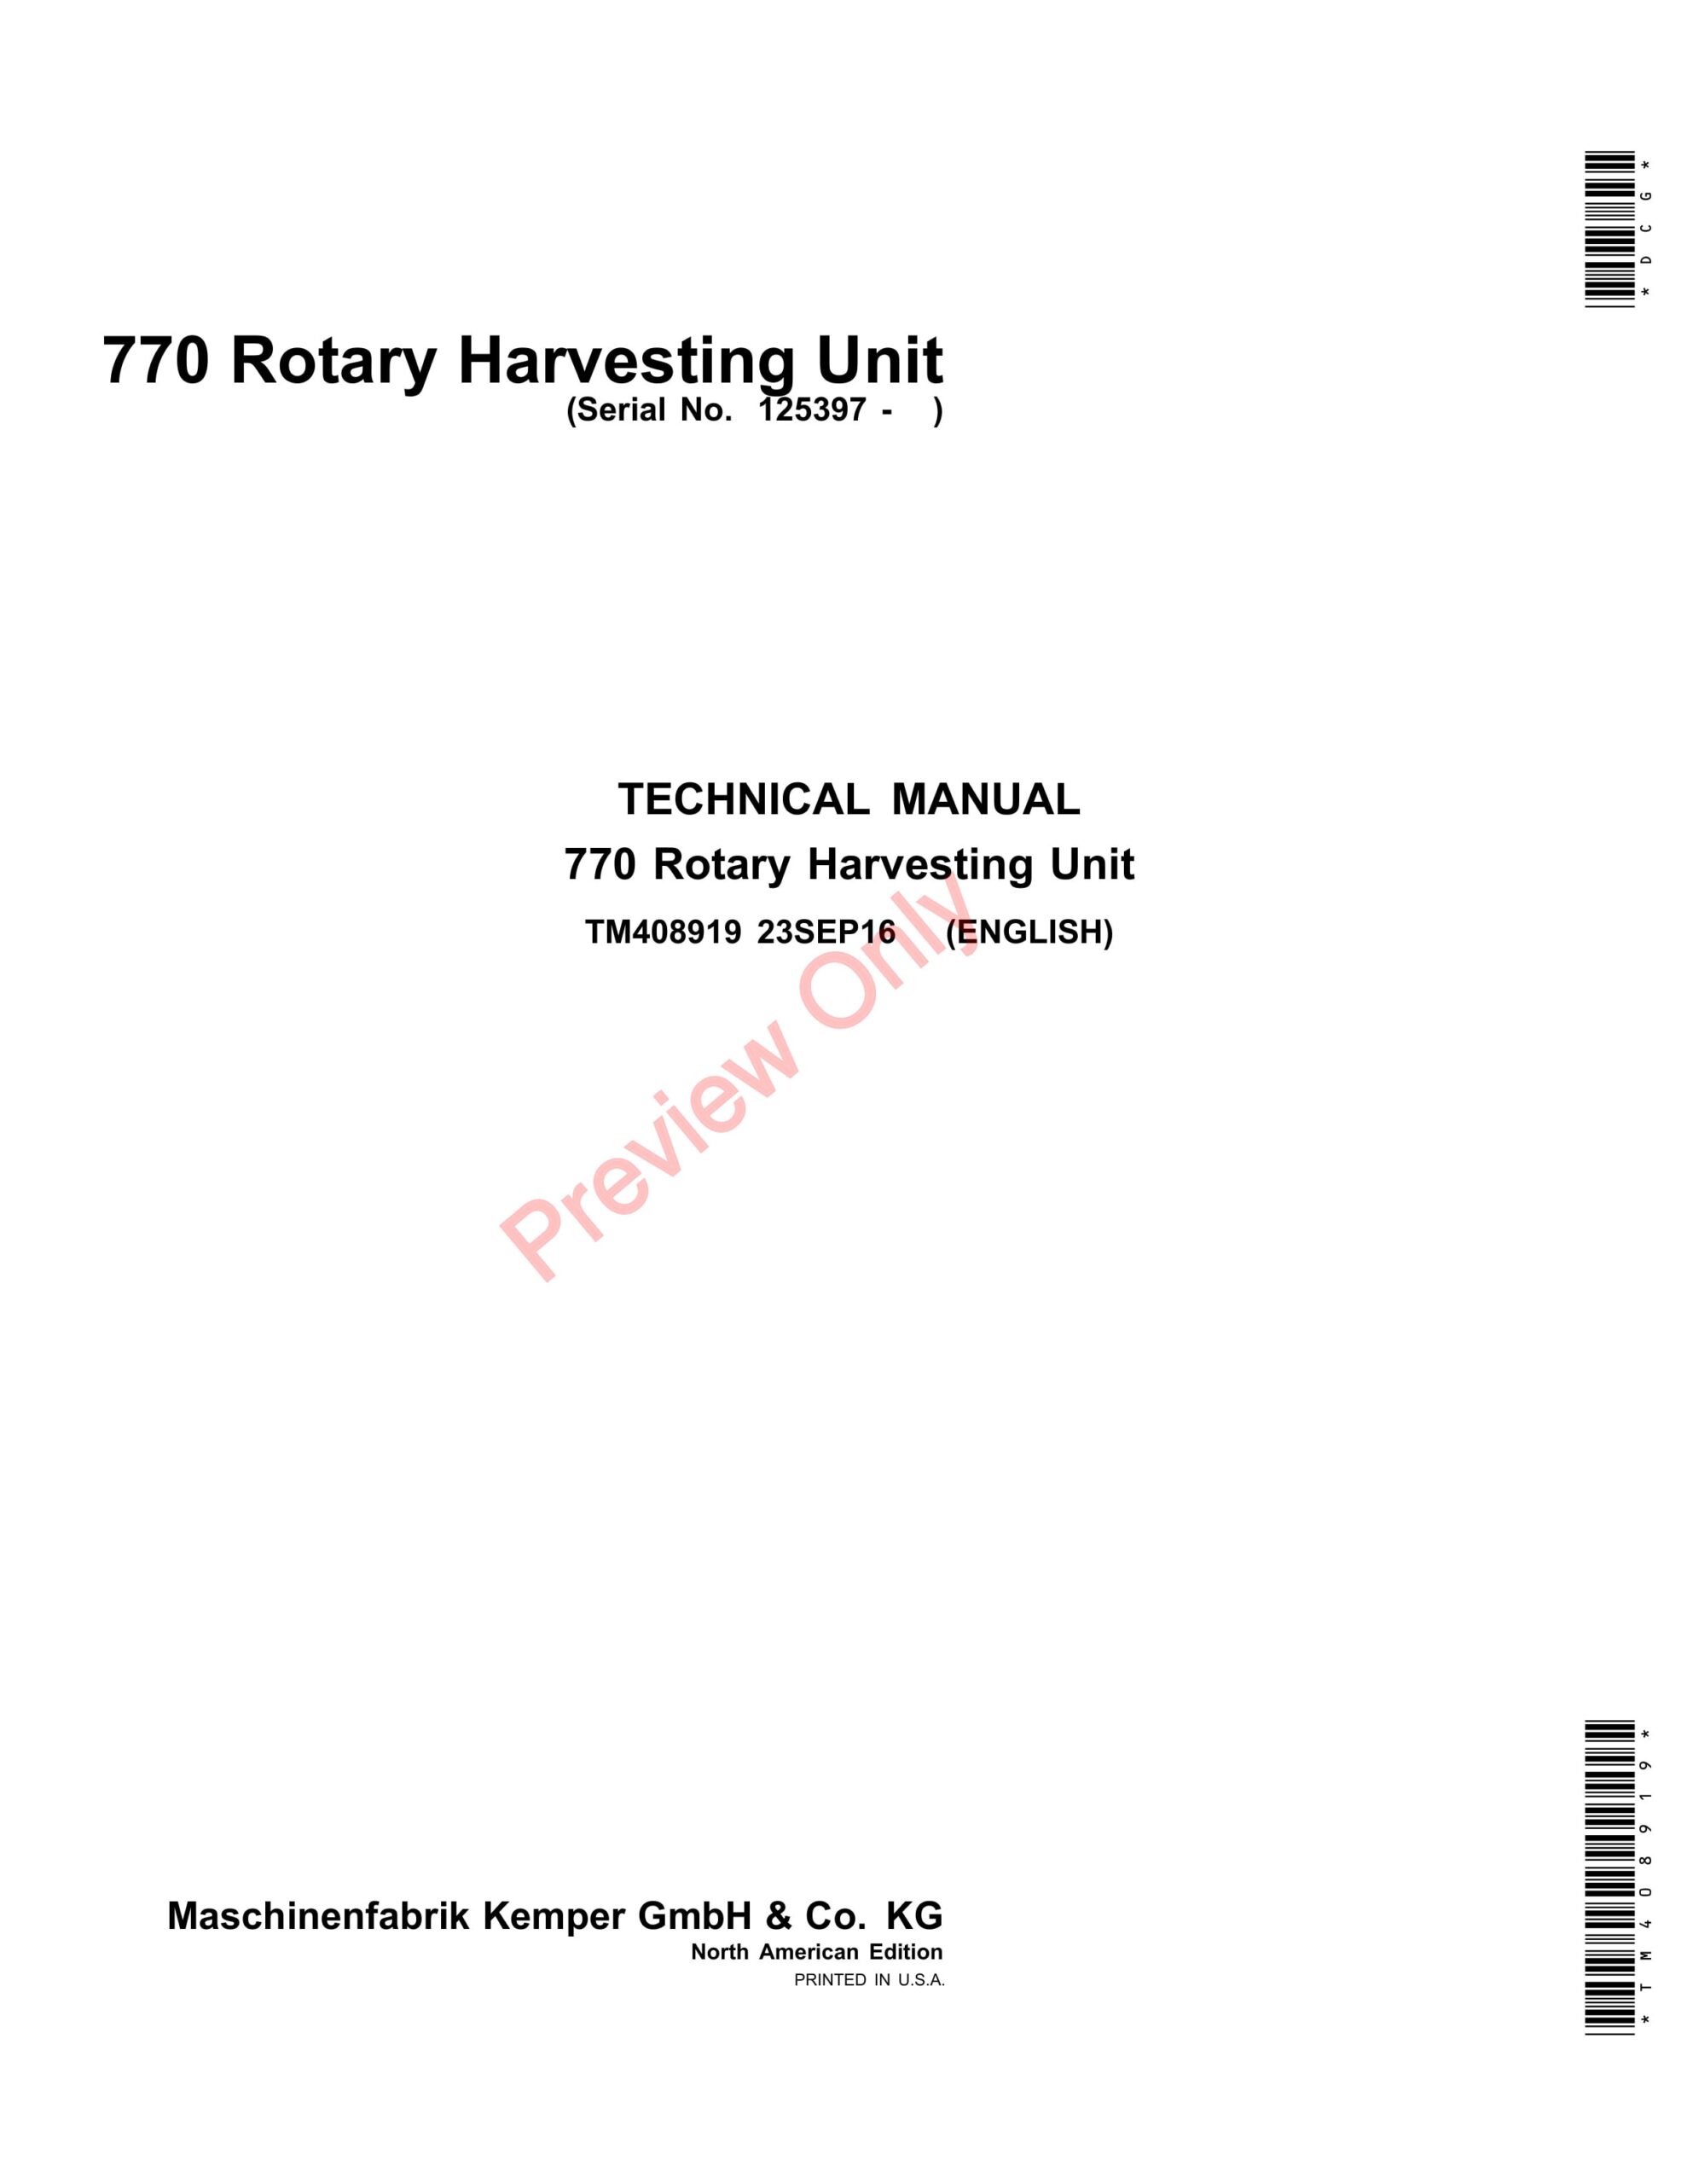 John Deere 770 Rotary Harvesting Unit Technical Manual TM408919 23SEP16-1